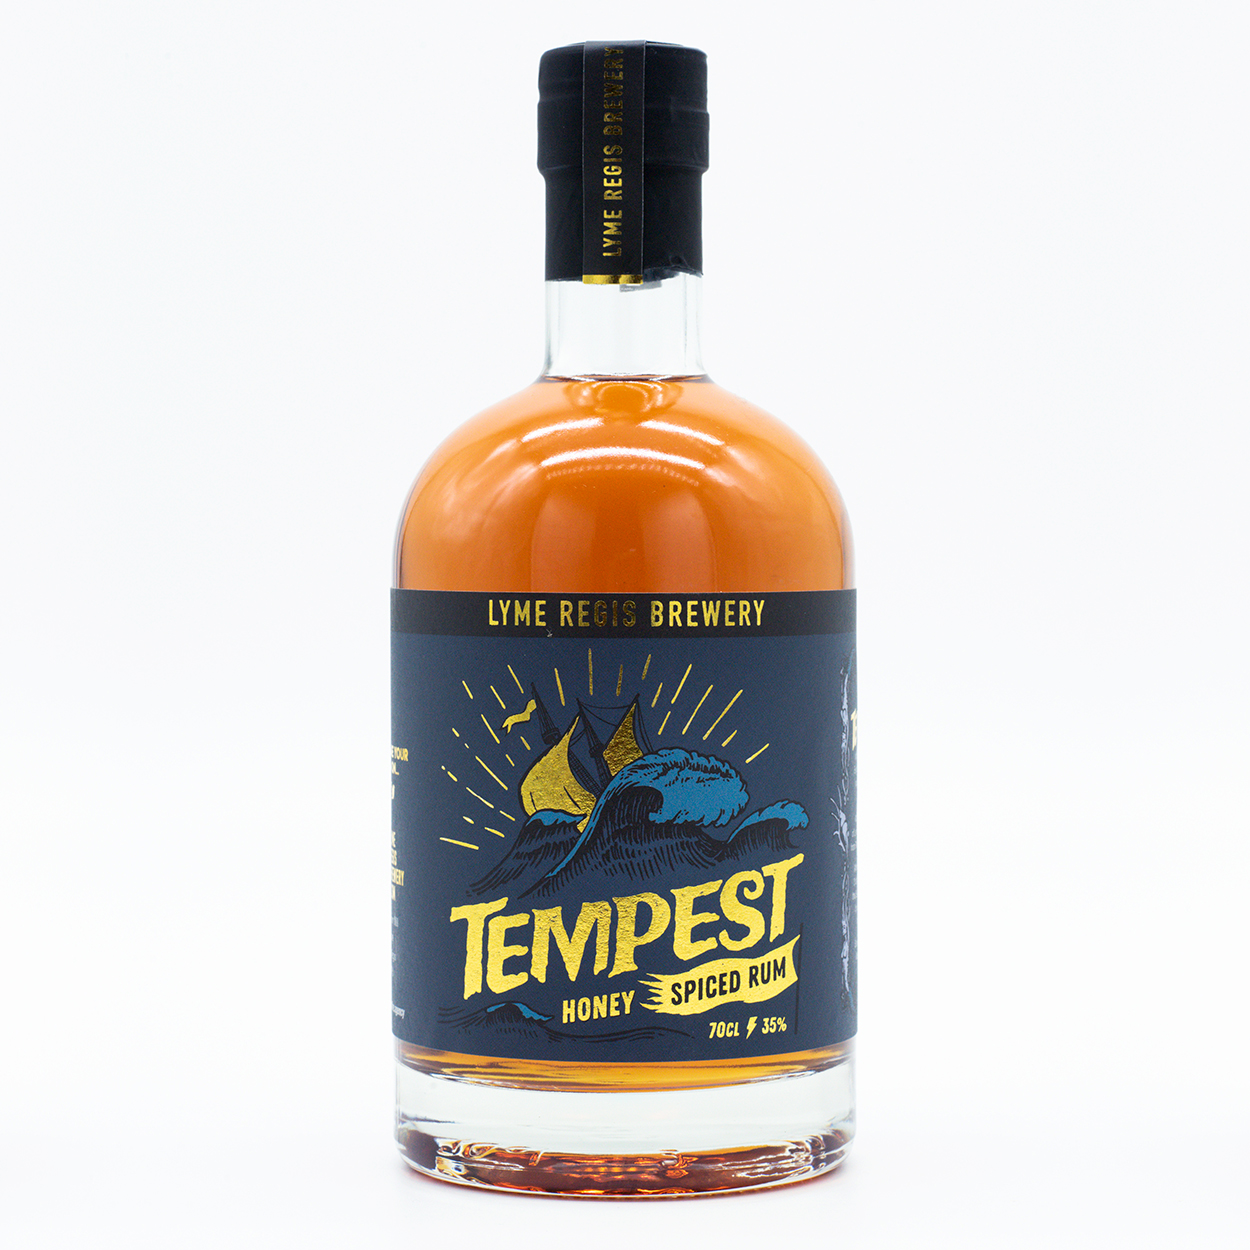 Tempest Spiced Rum